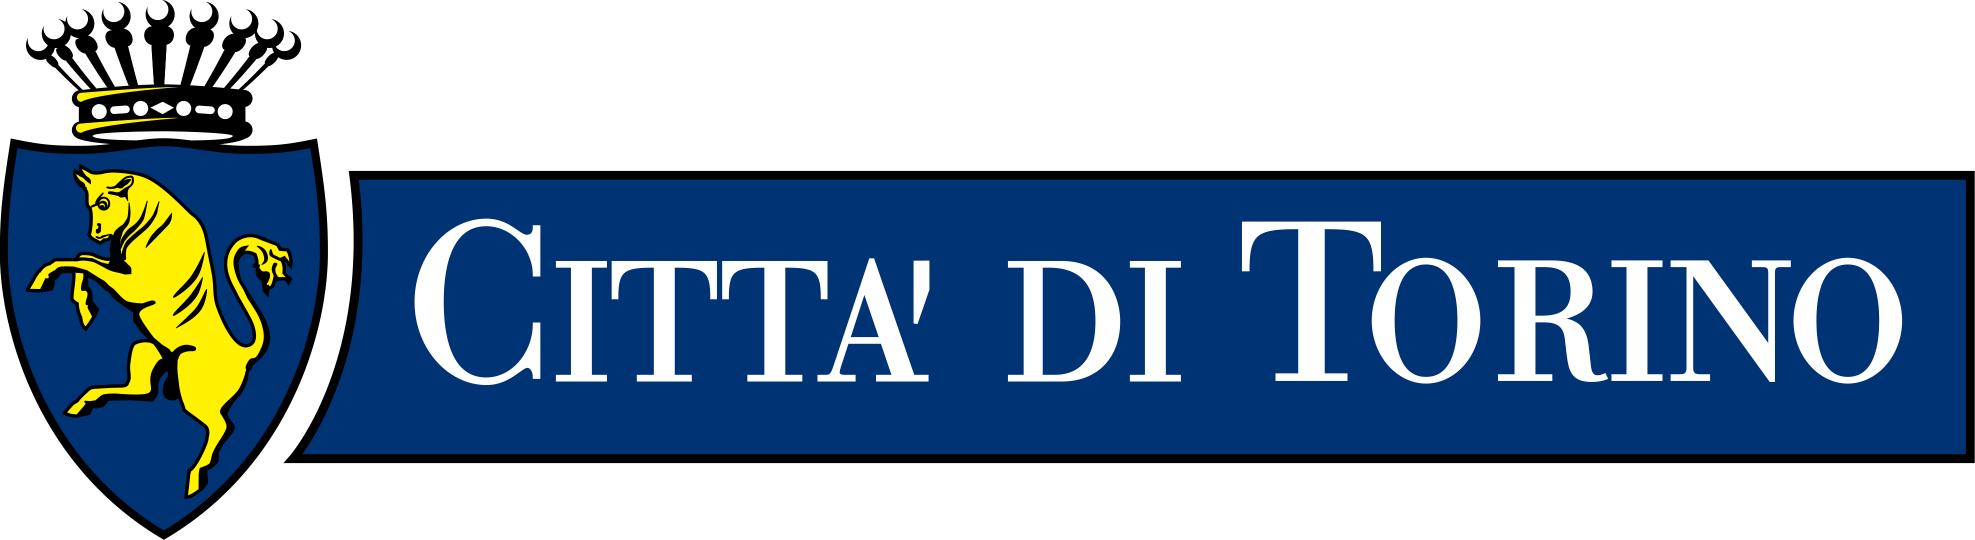 logo_citta_torino